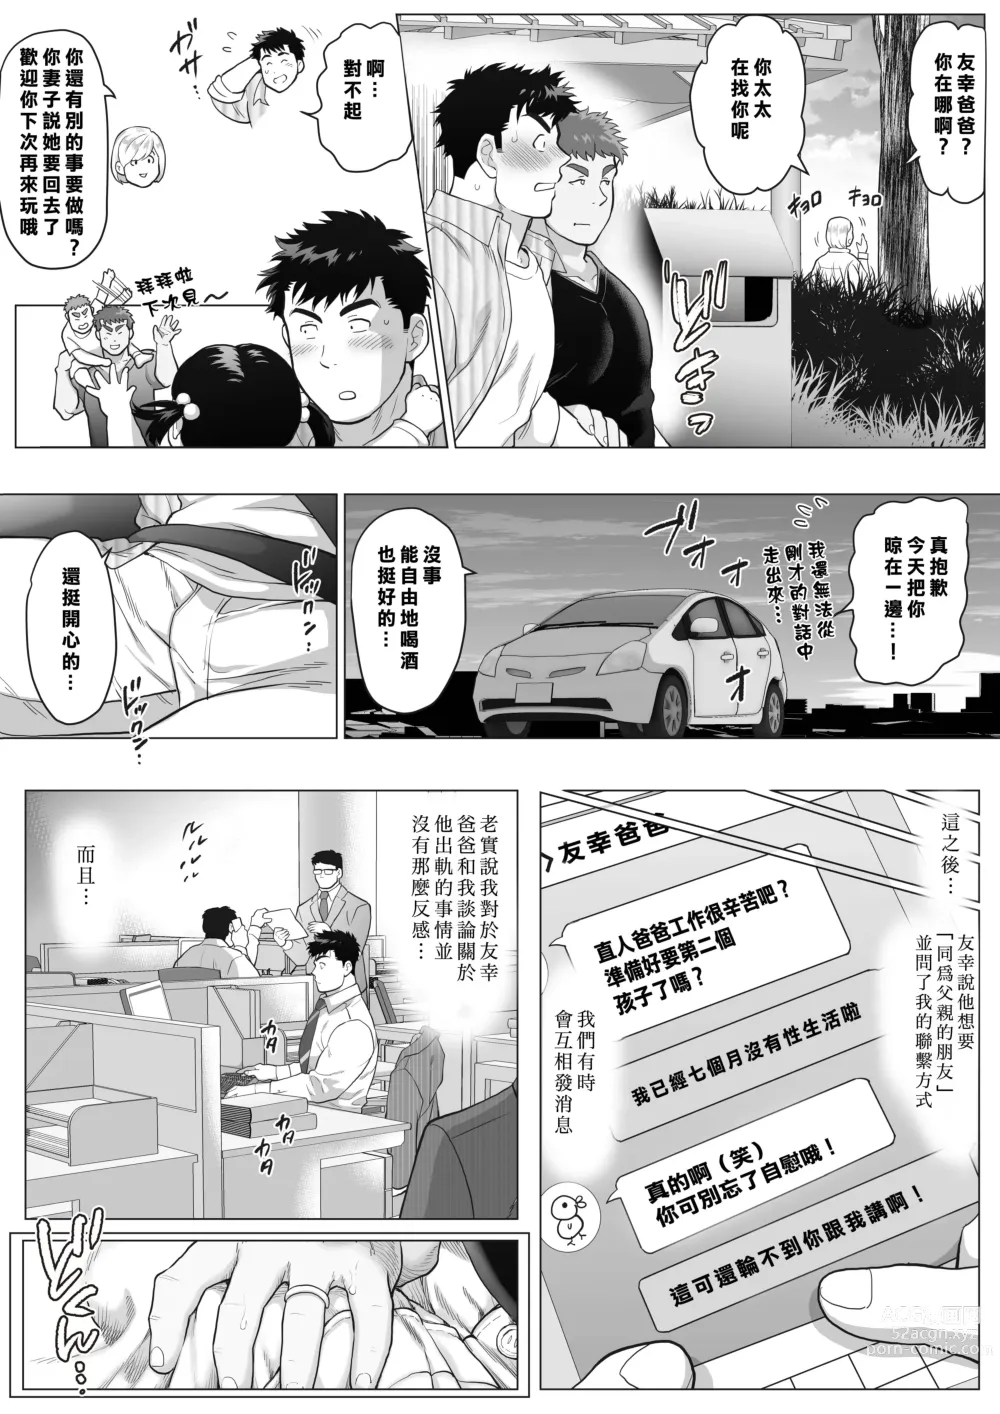 Page 12 of manga 直人爸爸与友幸爸爸 第一话